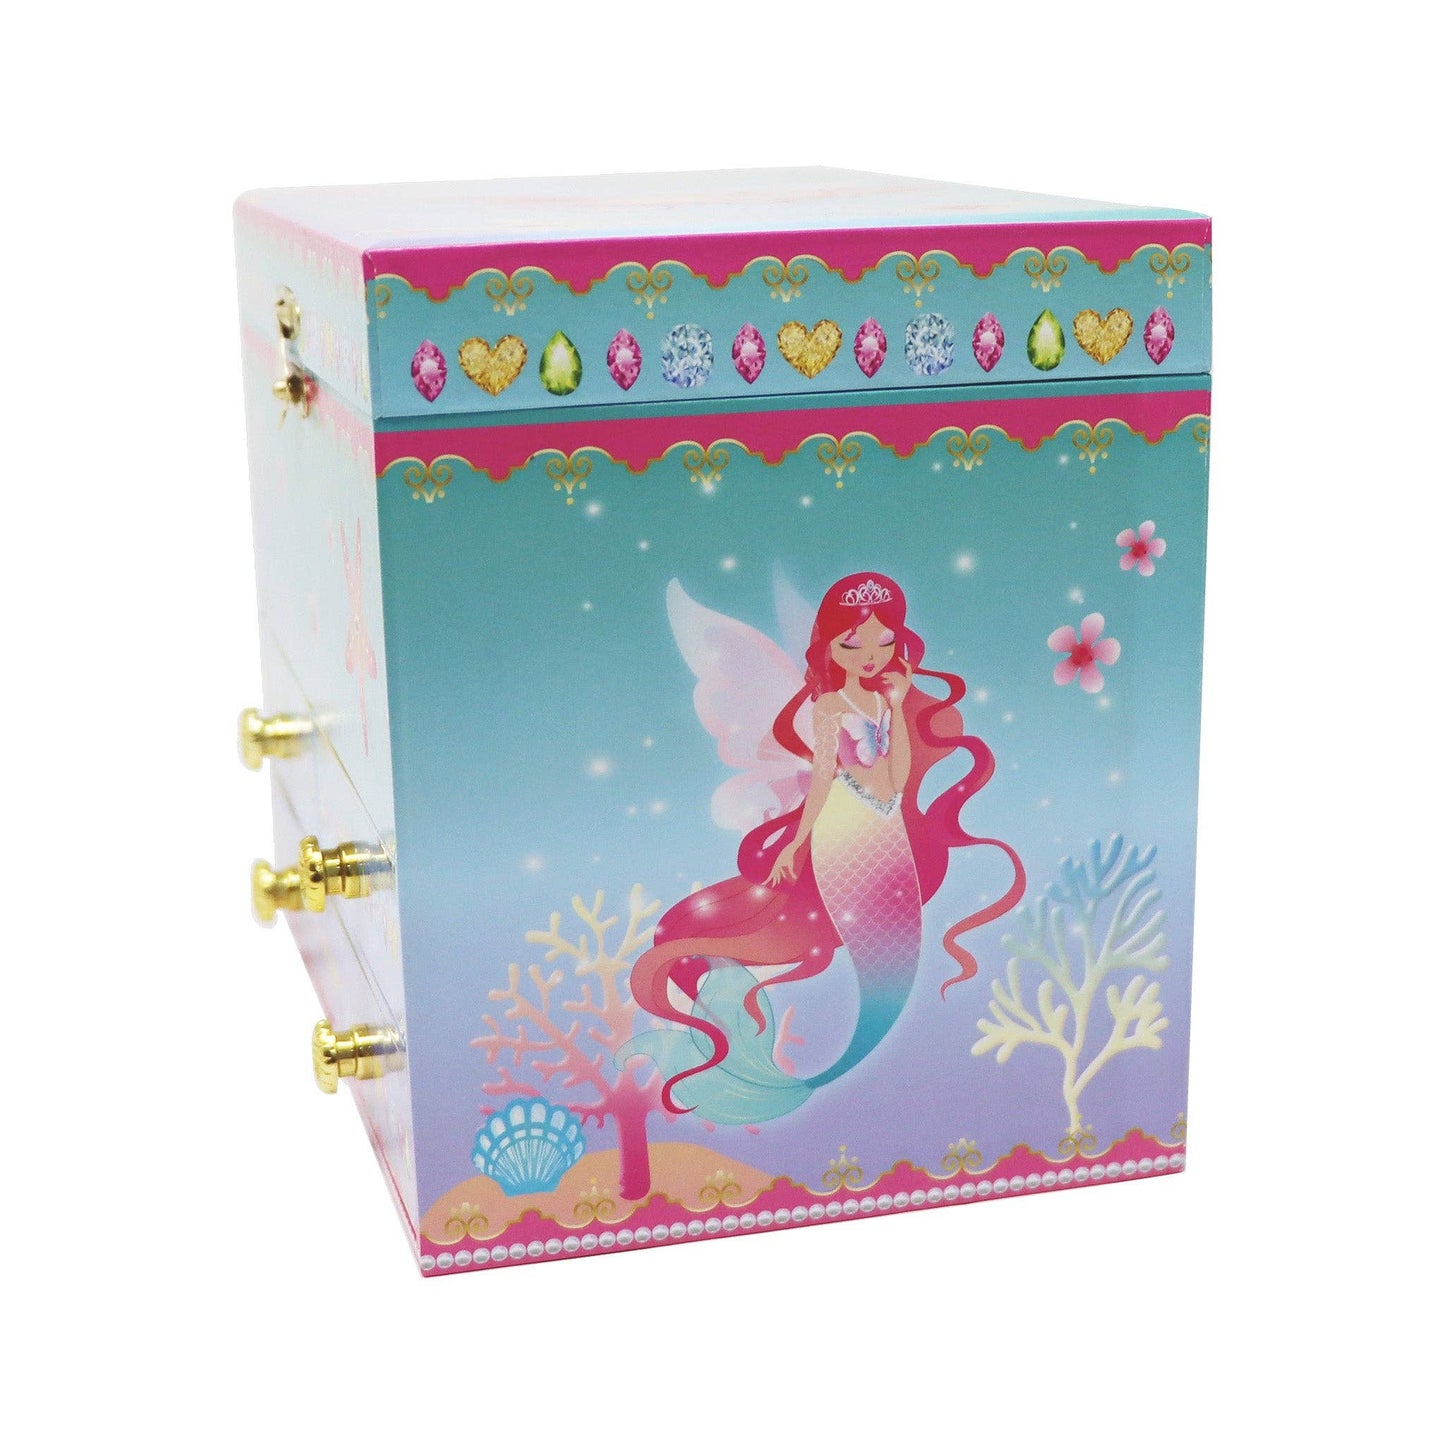 Shimmering Mermaid Medium Musical Jewlery Box